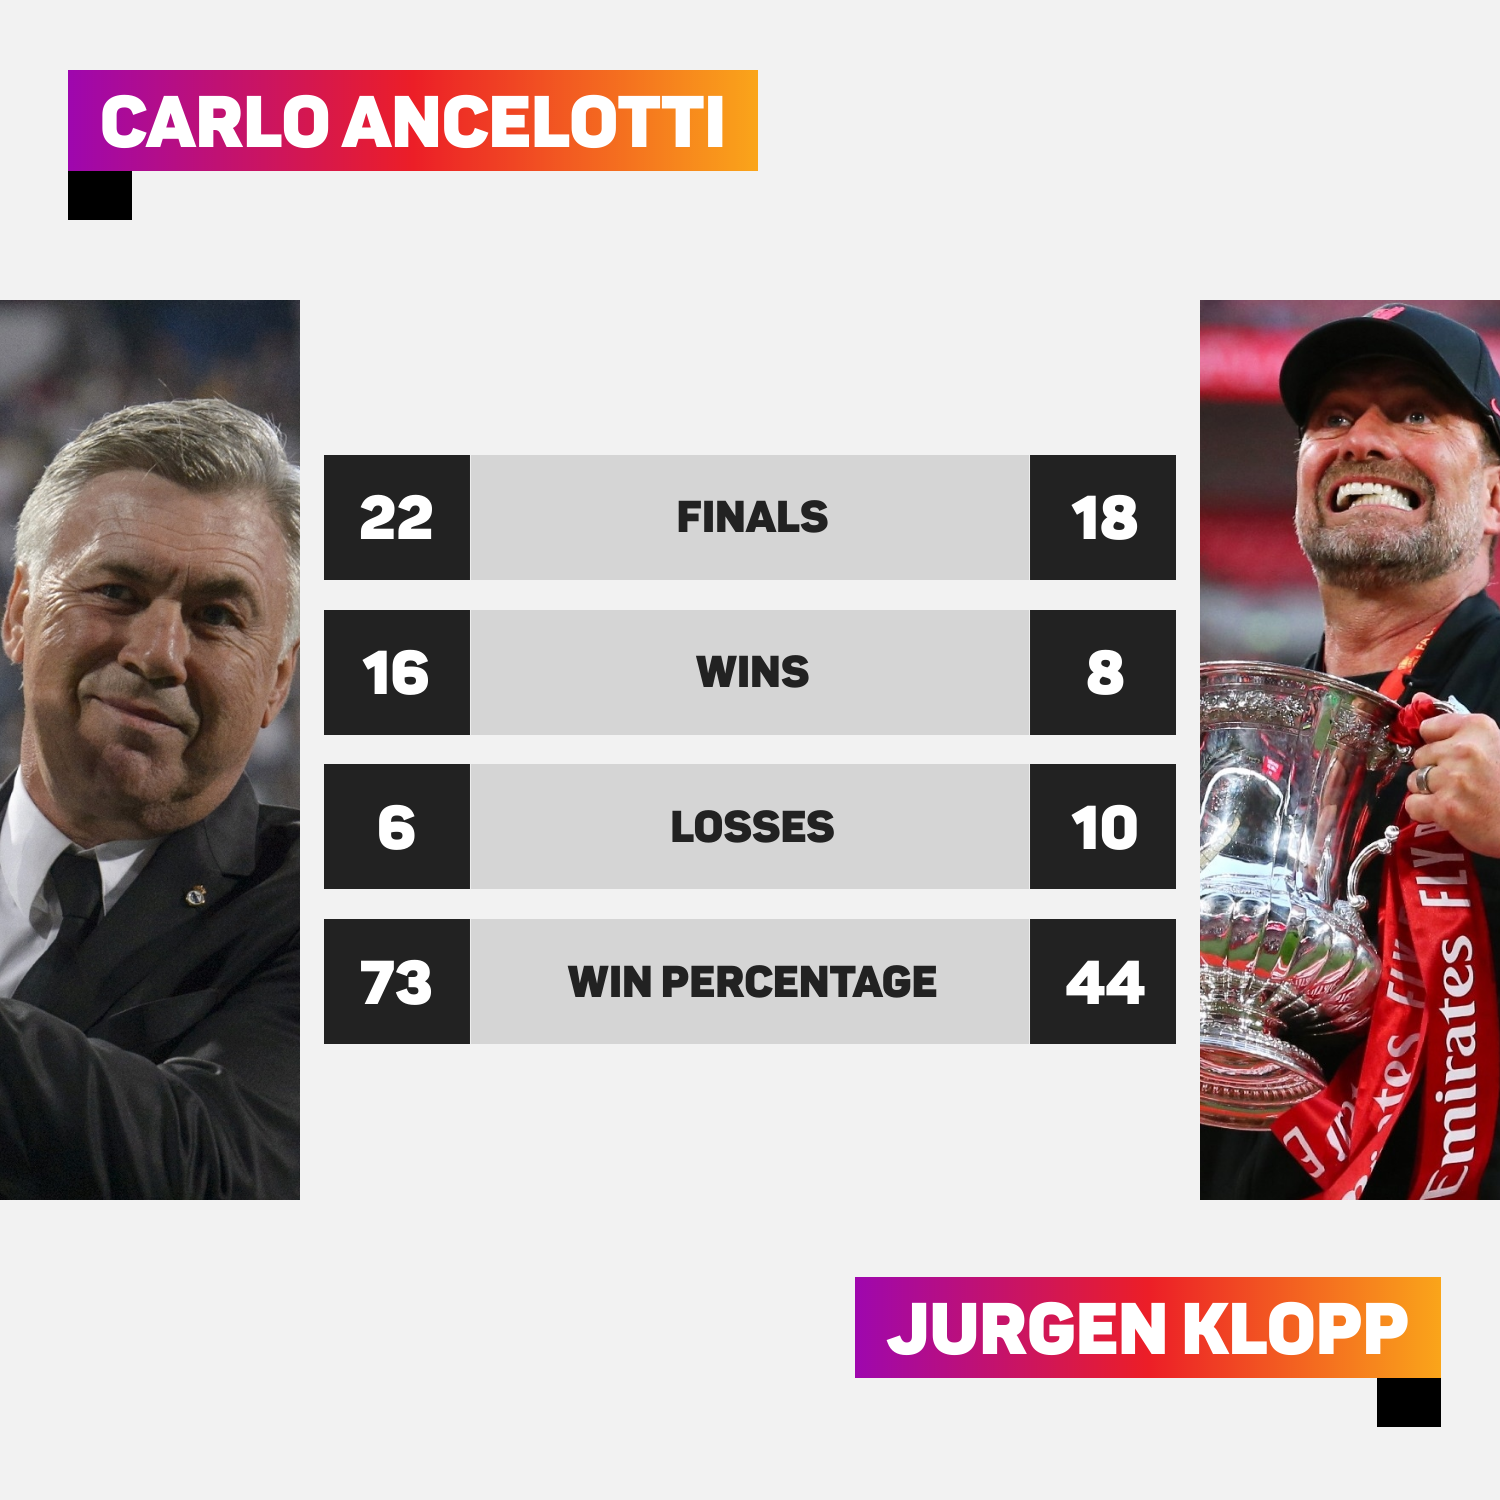 Ancelotti has a better record in finals compared to Klopp